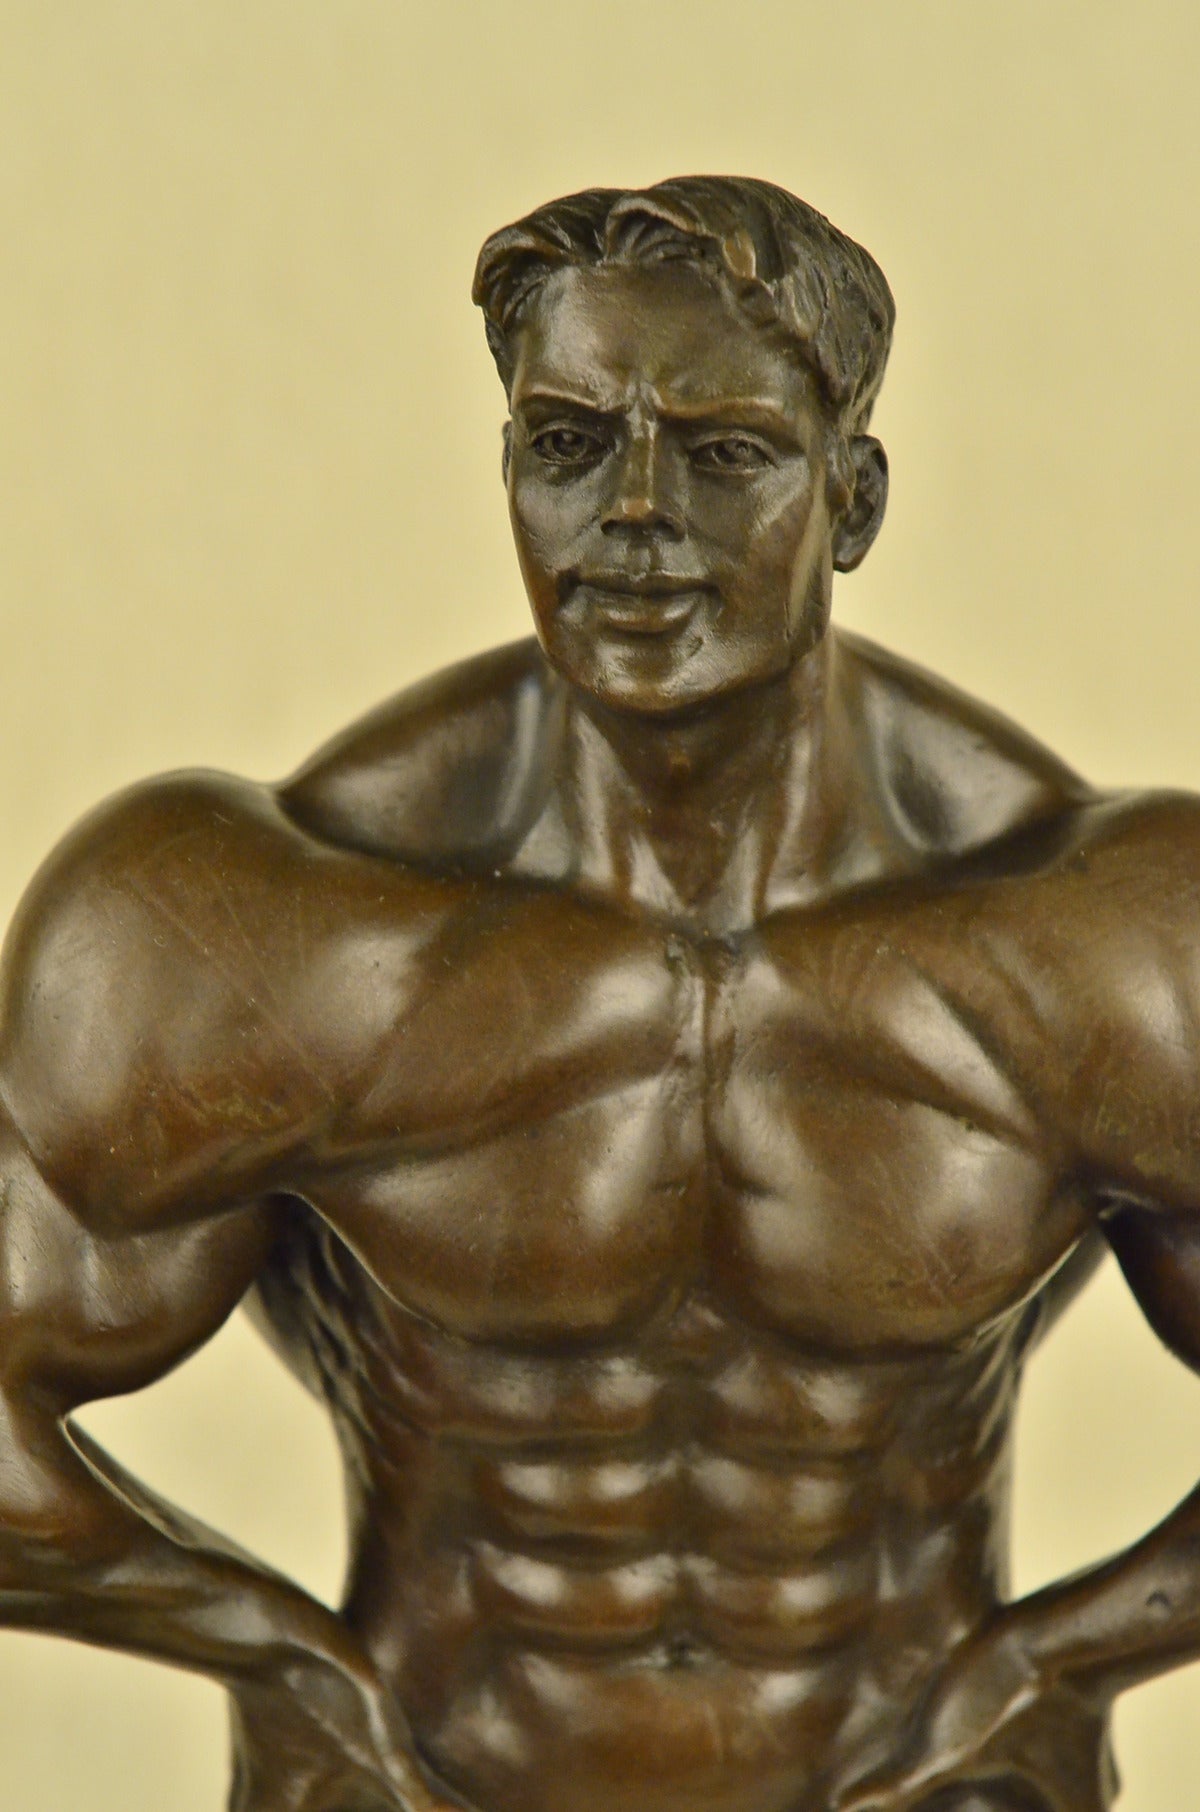 Handcrafted bronze sculpture SALE Standing Male Nude Muscular Original